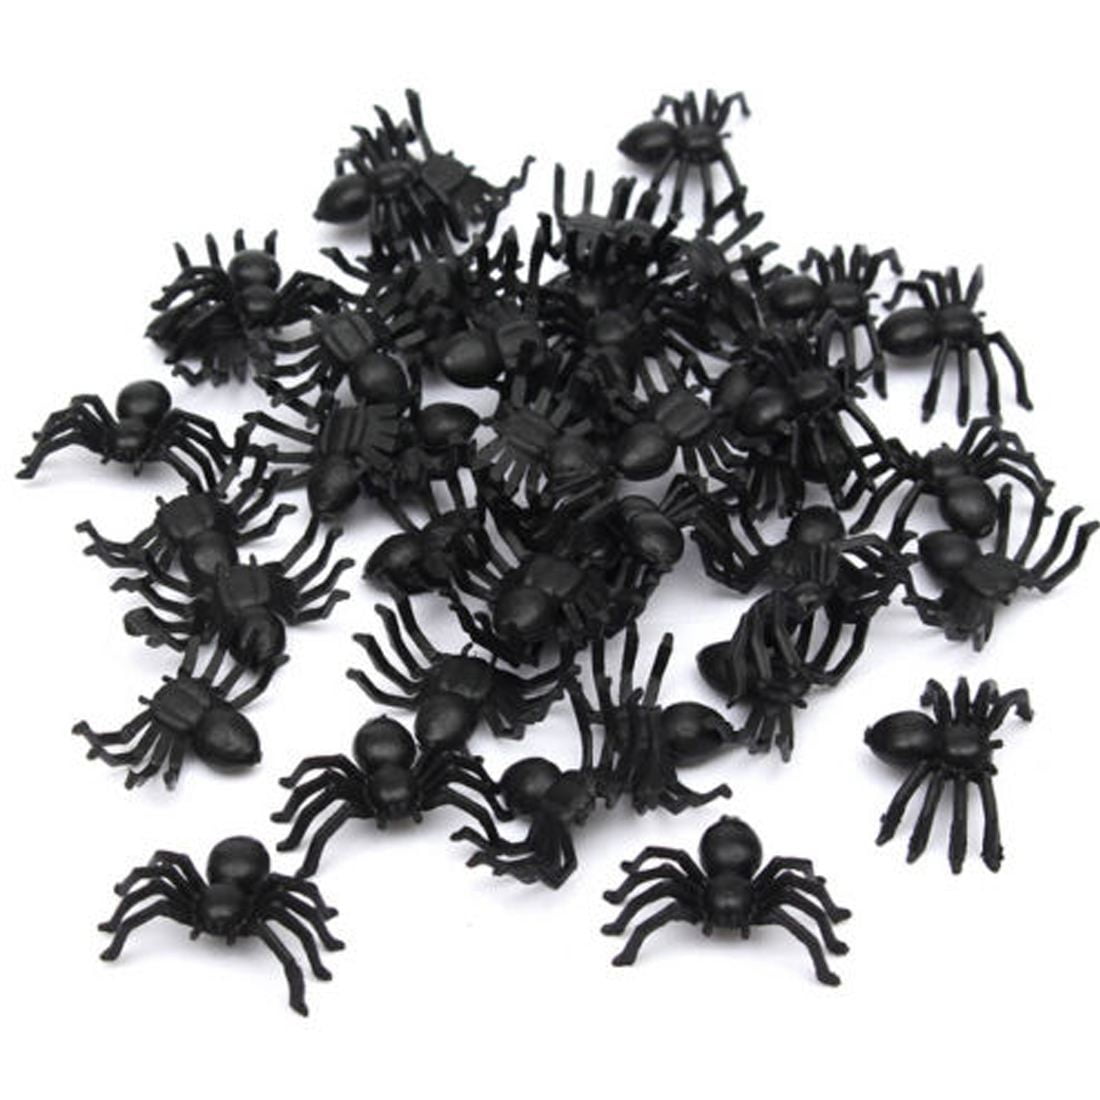 50pcs Plastic Black Simulation Small Spiders Halloween Trick Toy Prop Decor 